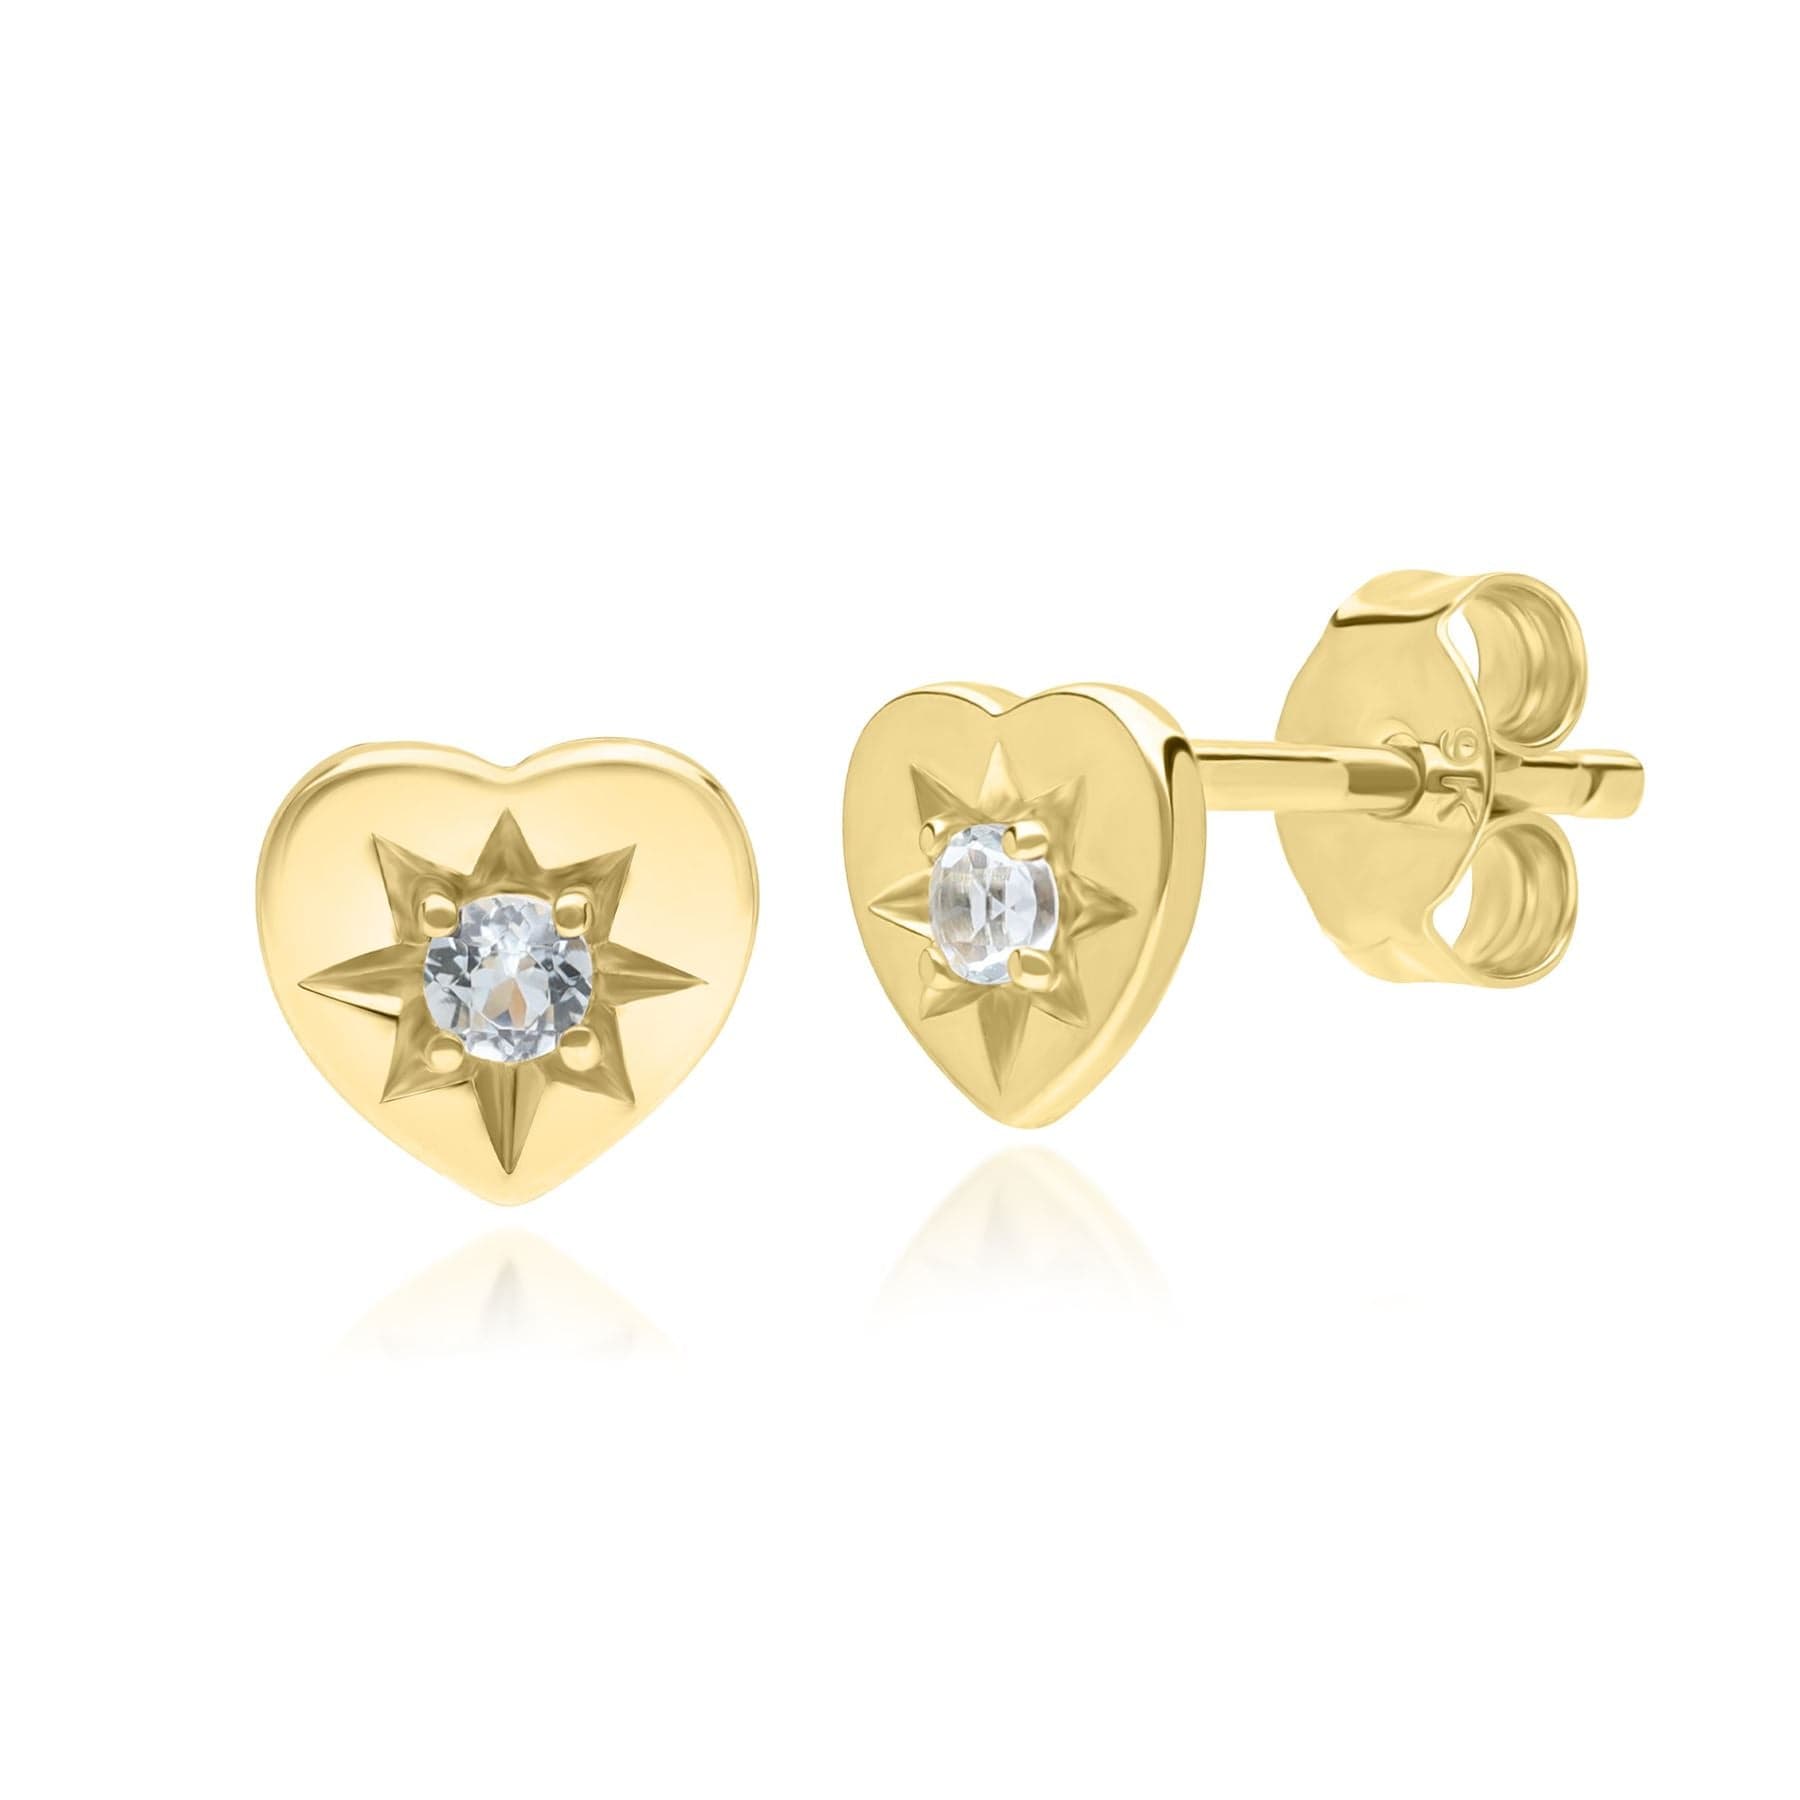 ECFEW™ 'The Liberator' Blue Topaz Heart Stud Earrings in 9ct Yellow Gold - Gemondo